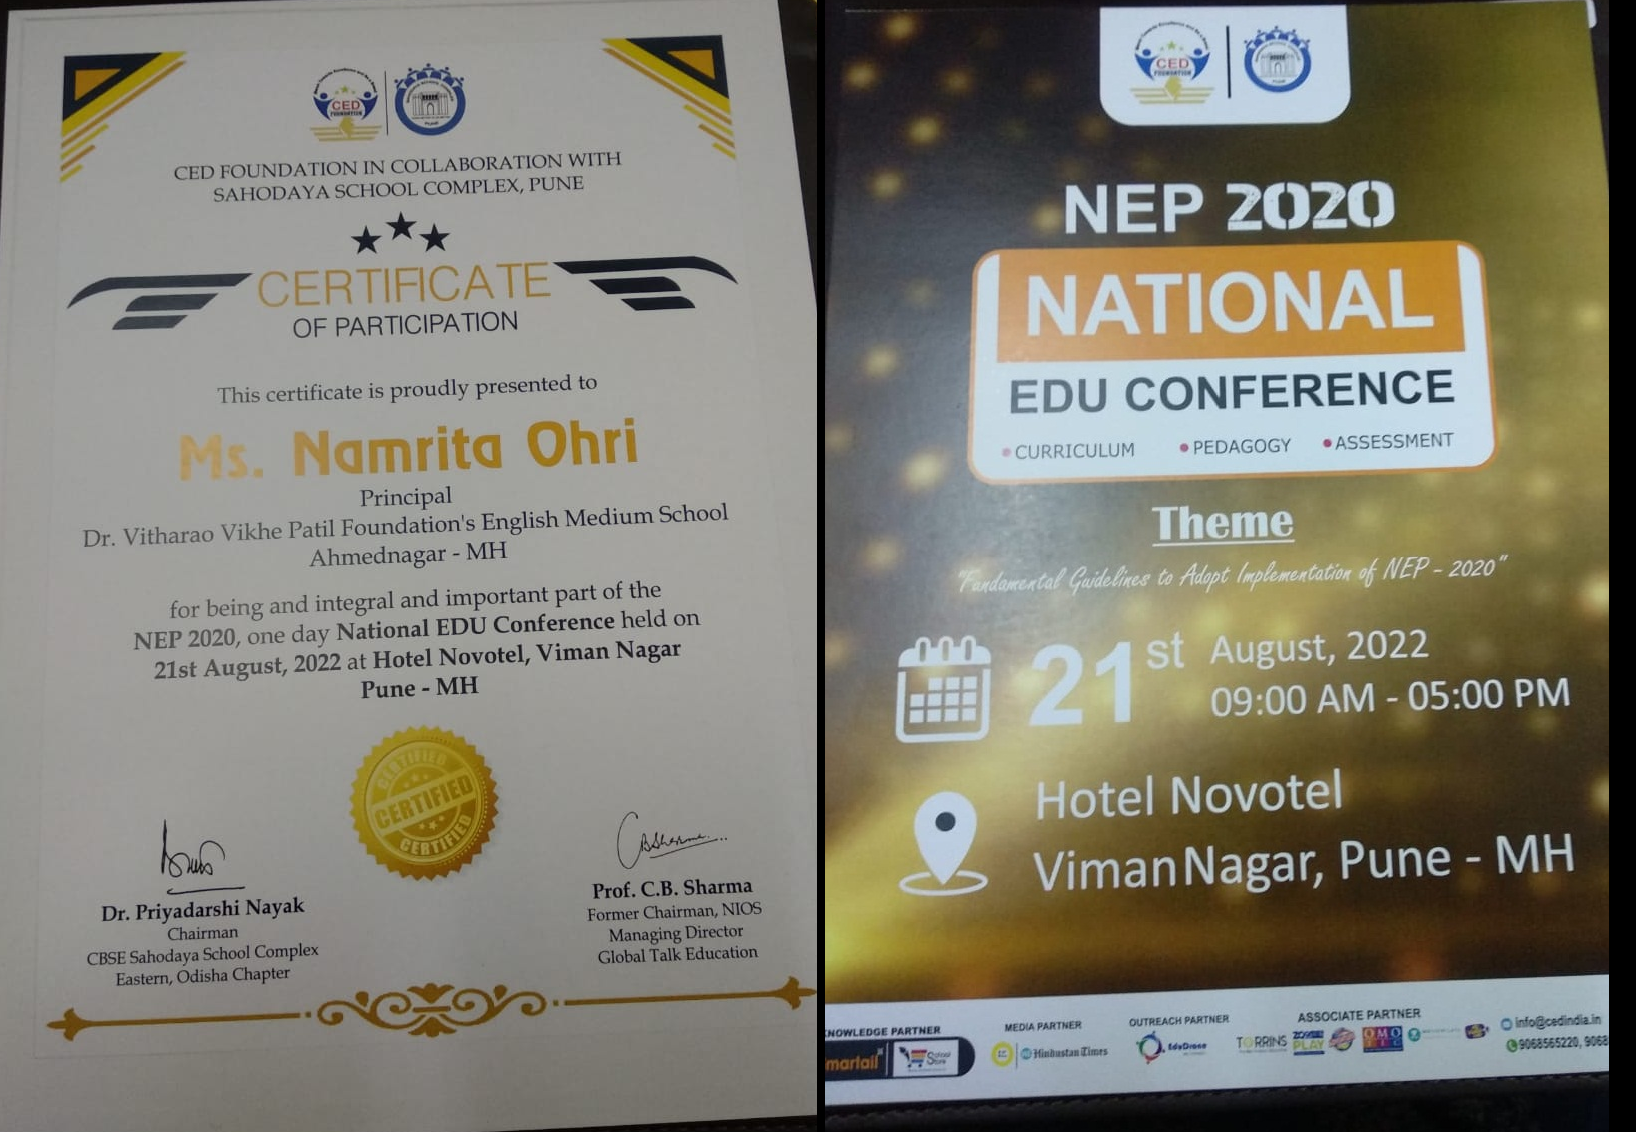 NEP 2020 National Edu Conferance